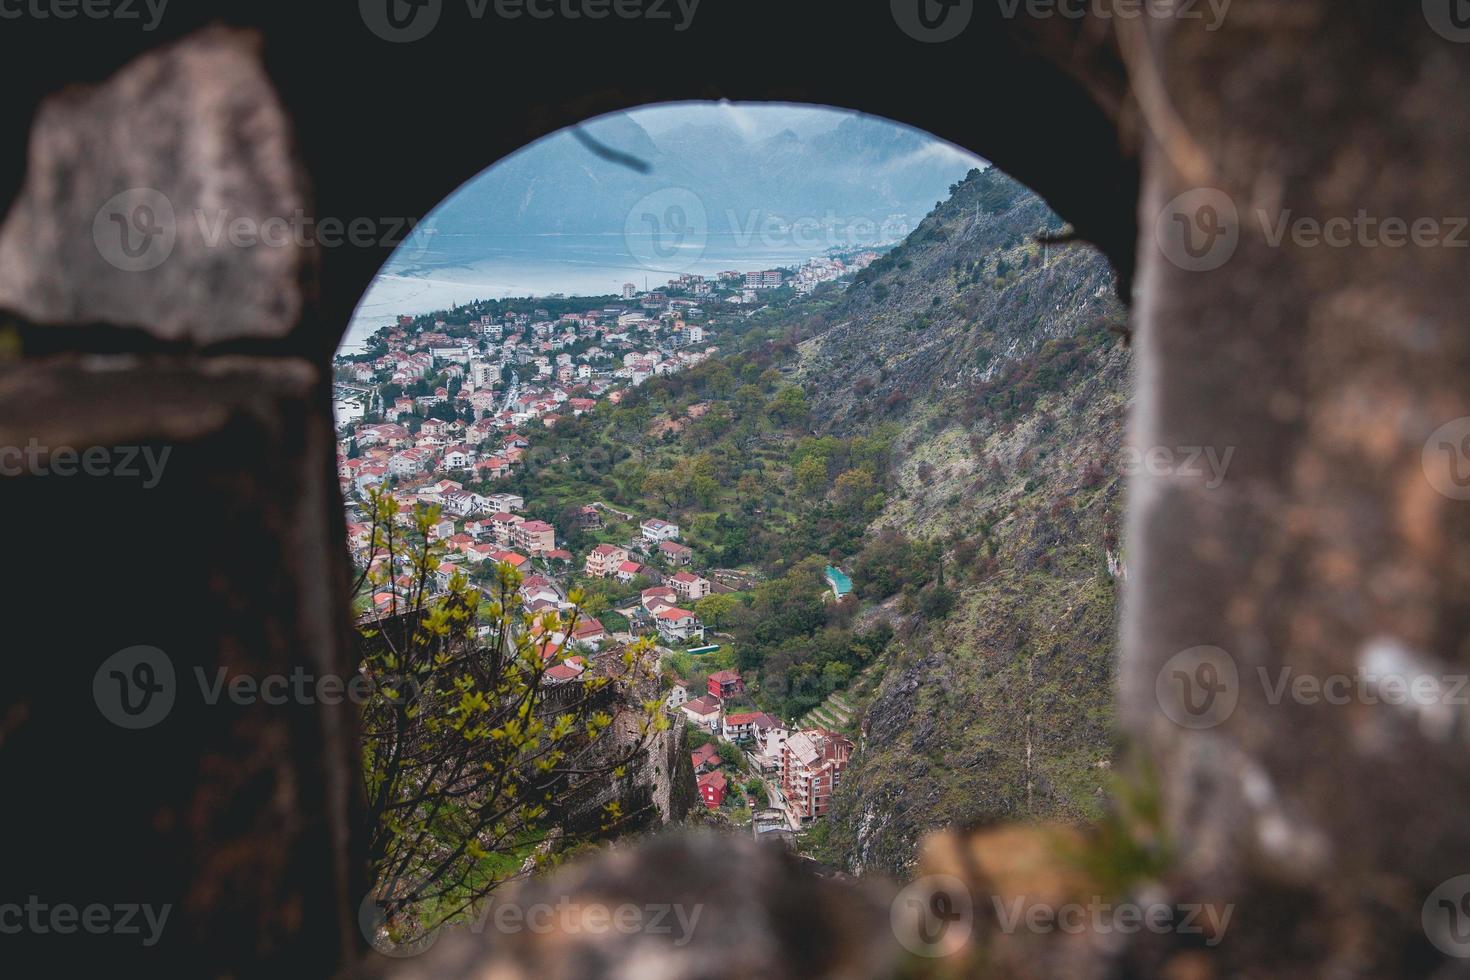 keer bekeken van van kotor oud stad- in Montenegro foto